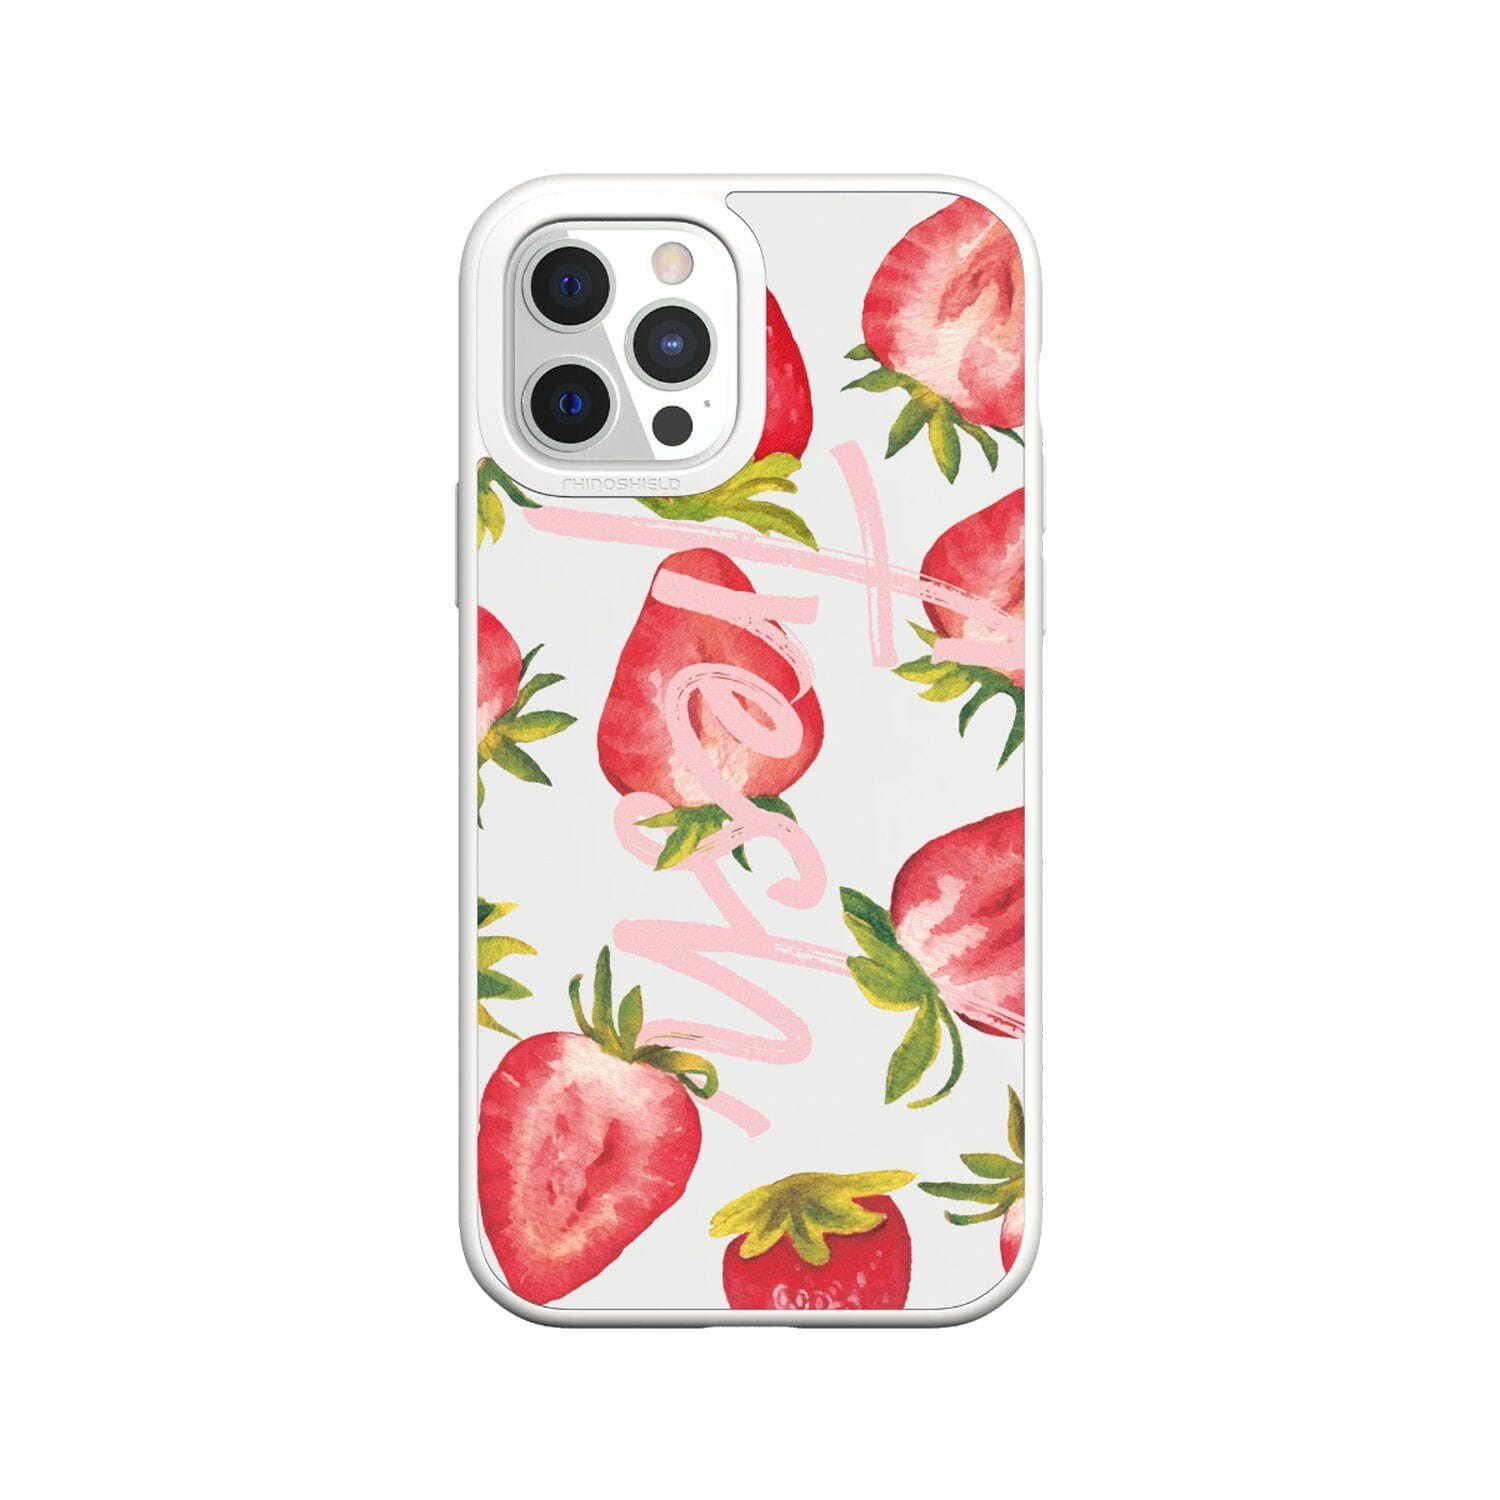 RhinoShield SolidSuit Design Case for iPhone 12 Series (2020) Default RhinoShield iPhone 12 Pro Max 6.7" White/Sweet Strawberries 